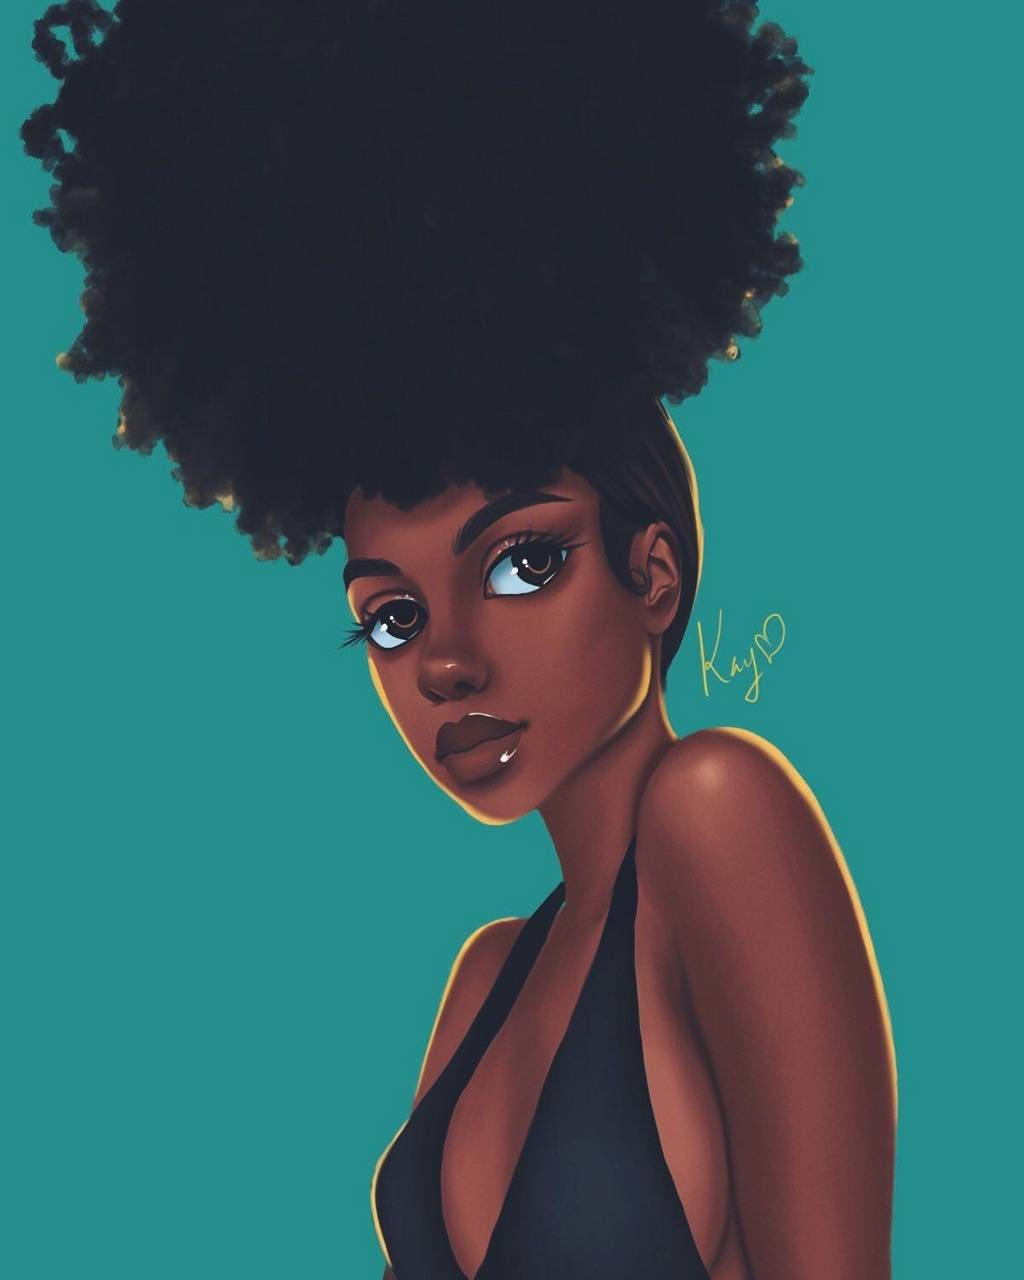 Free Black Girl Cartoon Wallpaper Downloads, [100+] Black Girl Cartoon  Wallpapers for FREE 